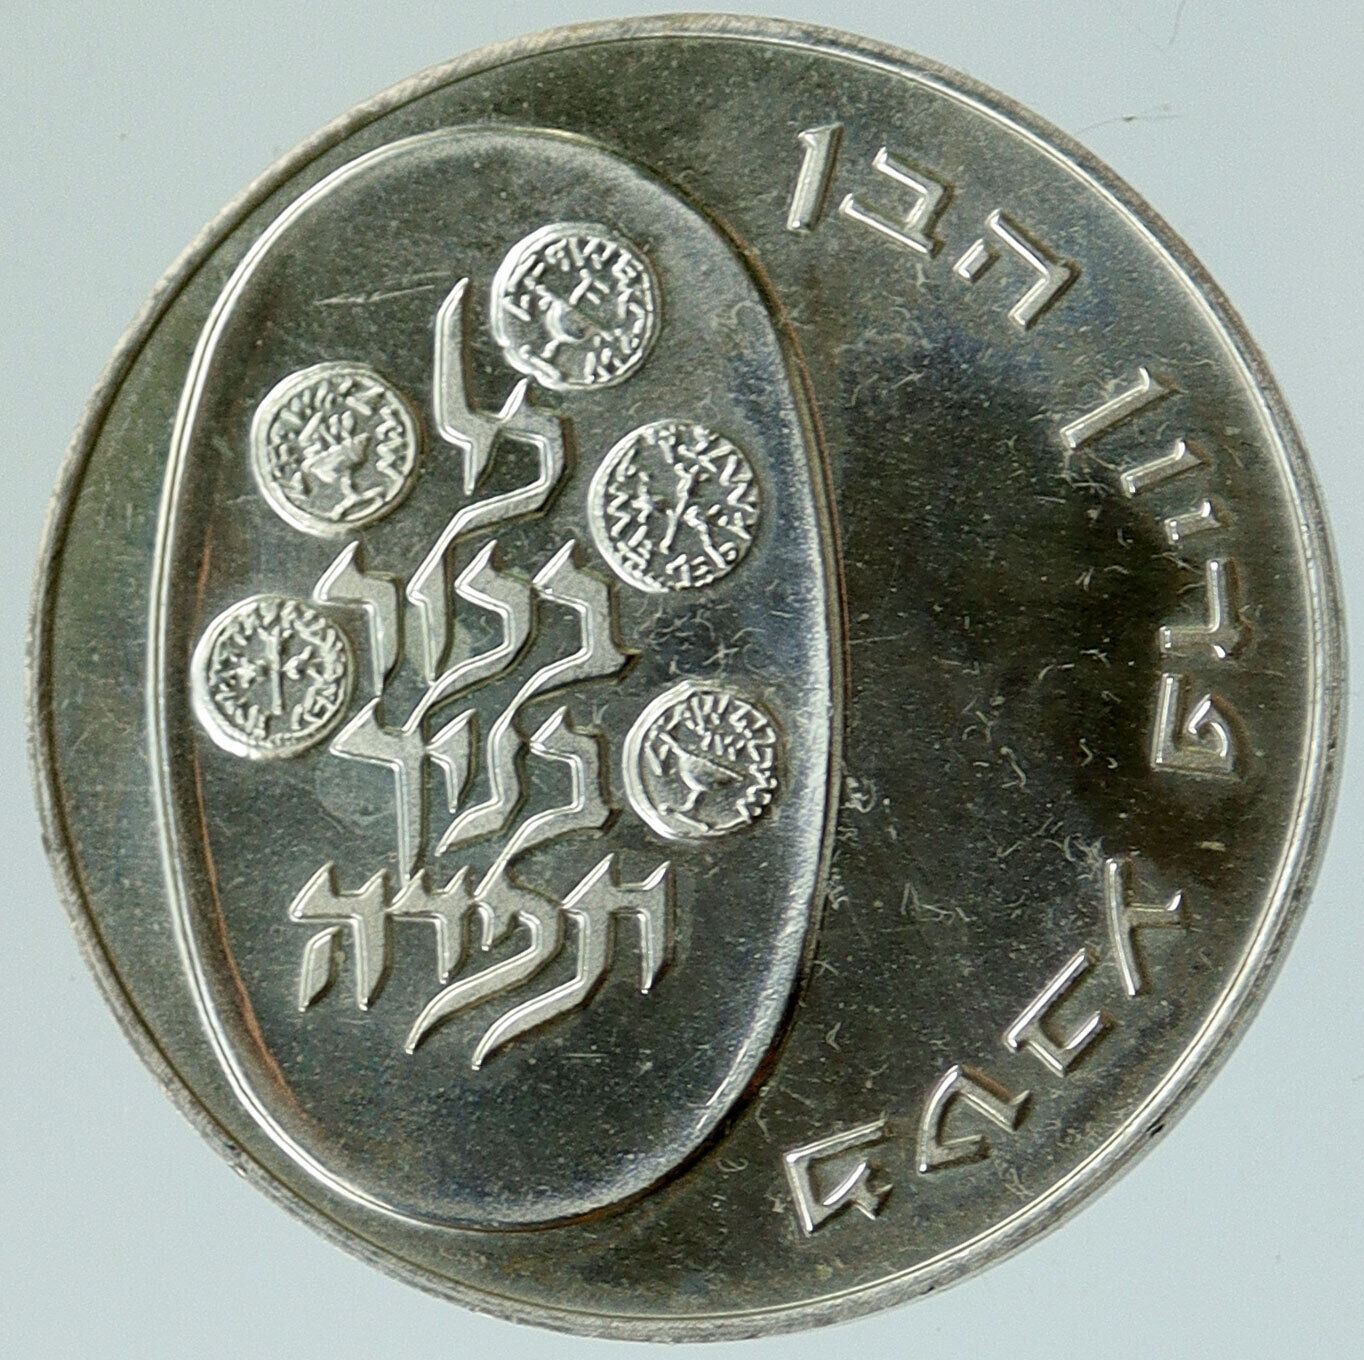 1974 ISRAEL Jewish 1stBorn Son PIDYON HABEN Old BU Silver 10 Lirot Coin i116774